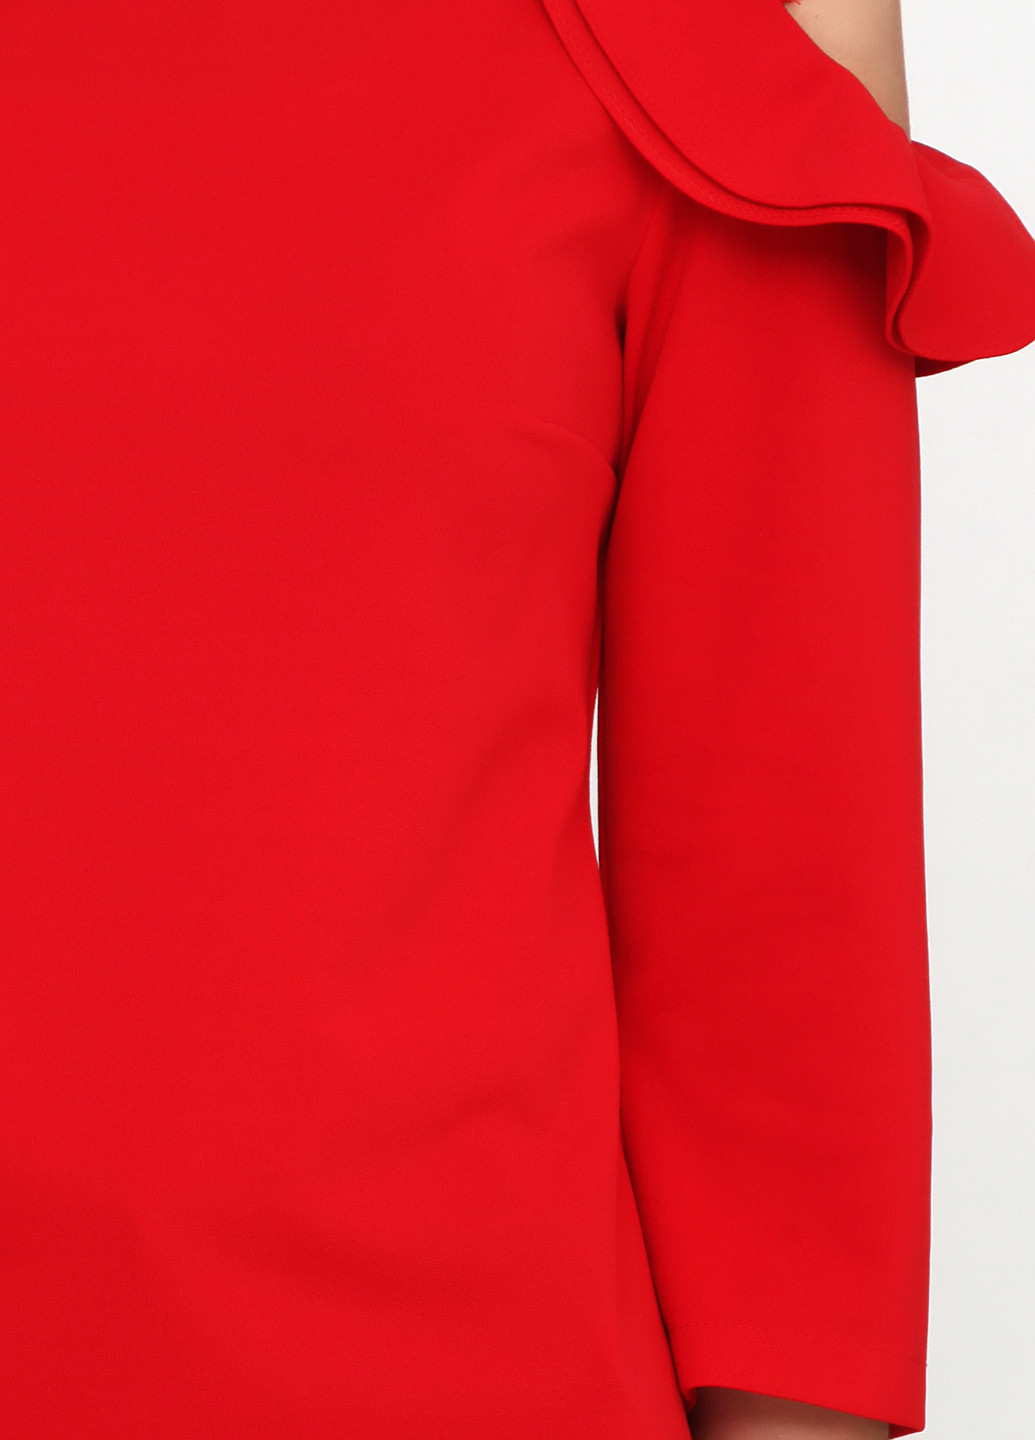 Красная блуза ZUBRYTSKAYA